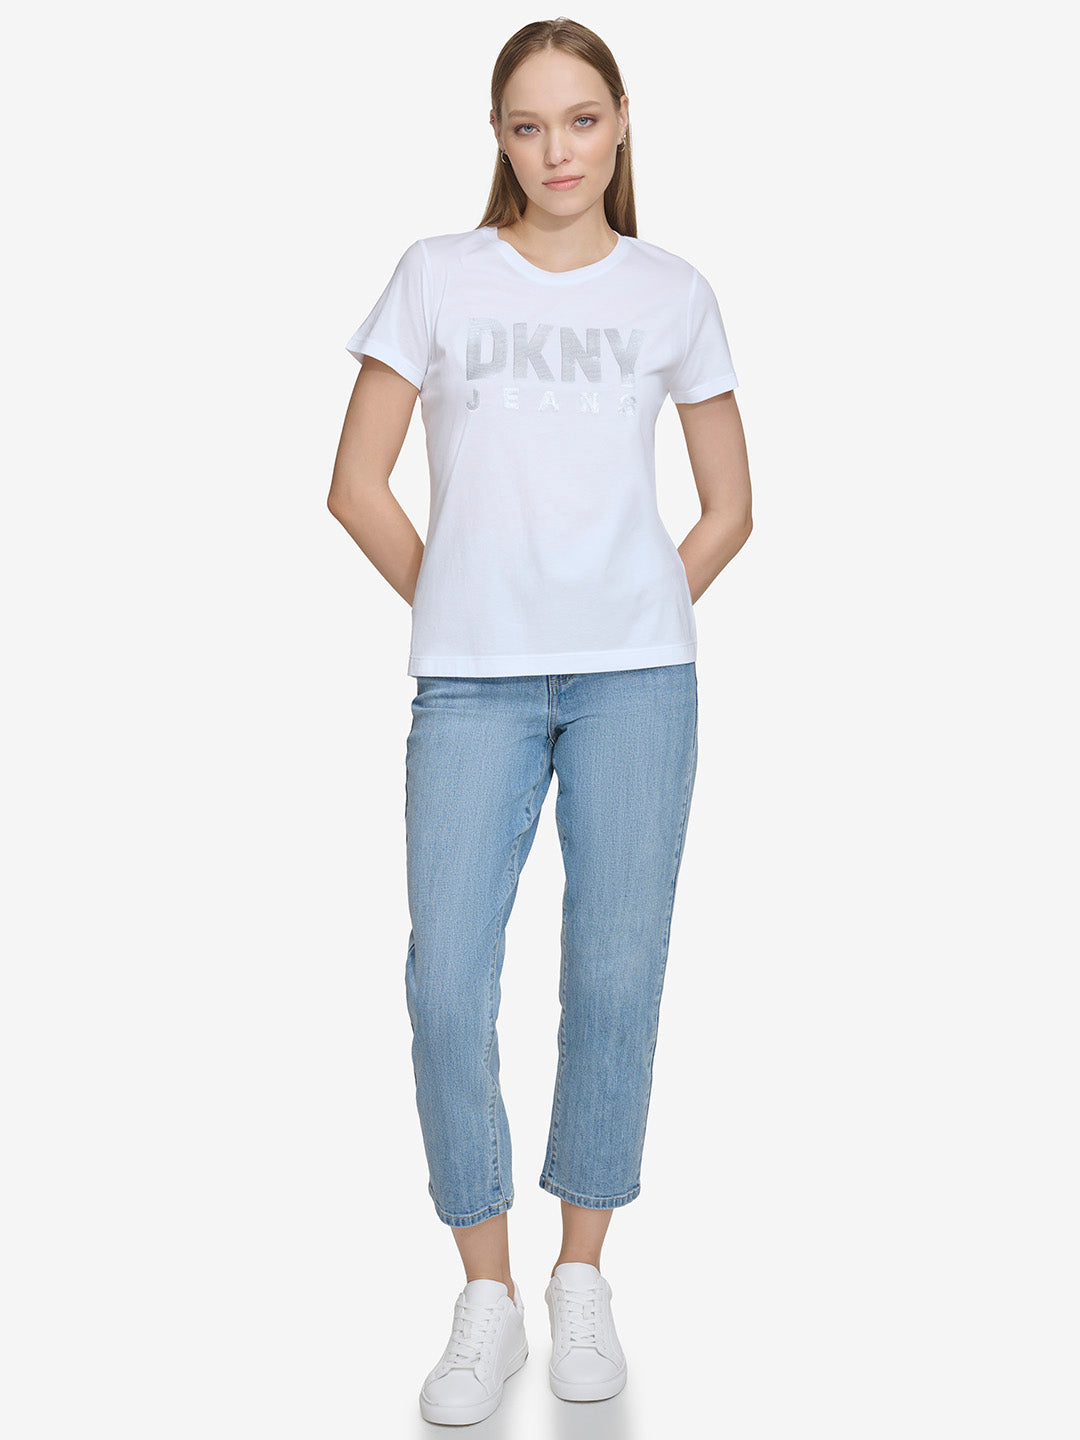 DKNY Women White Printed Round Neck Short Sleeves T-Shirt